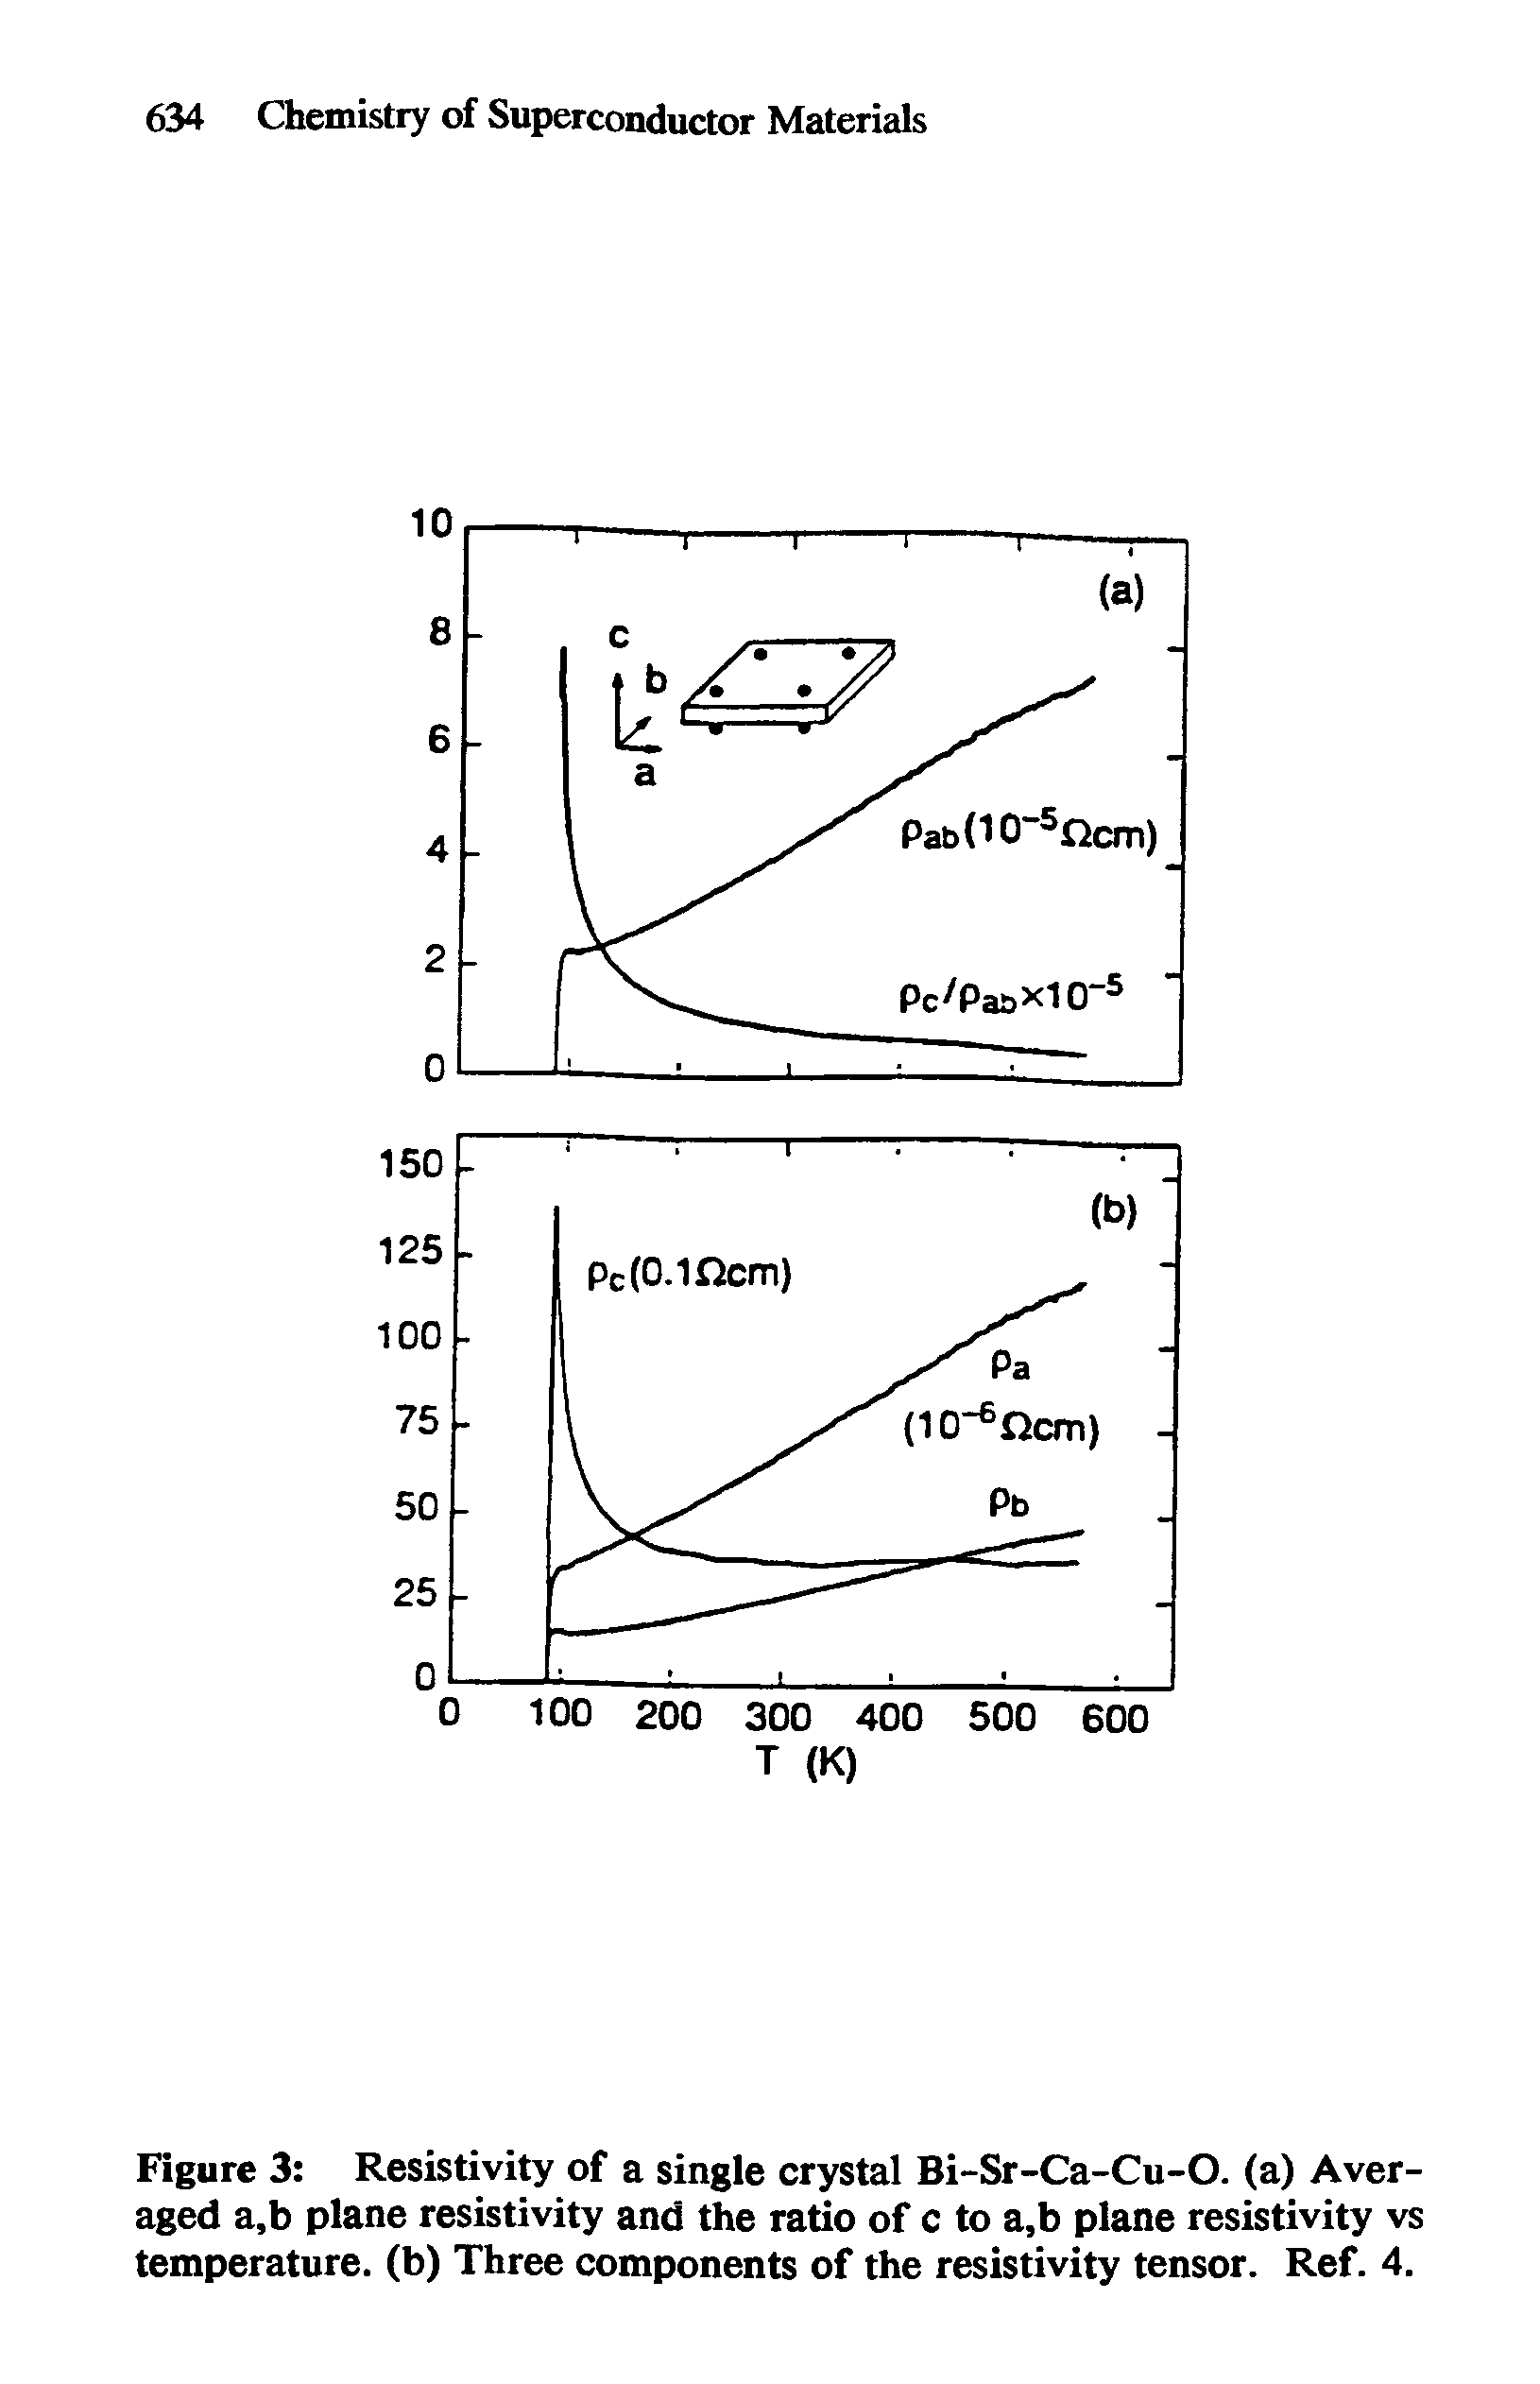 Figure 3 Resistivity of a single crystal Bi-Sr-Ca-Cu-O. (a) Averaged a,b plane resistivity and the ratio of c to a,b plane resistivity vs temperature, (b) Three components of the resistivity tensor. Ref. 4.